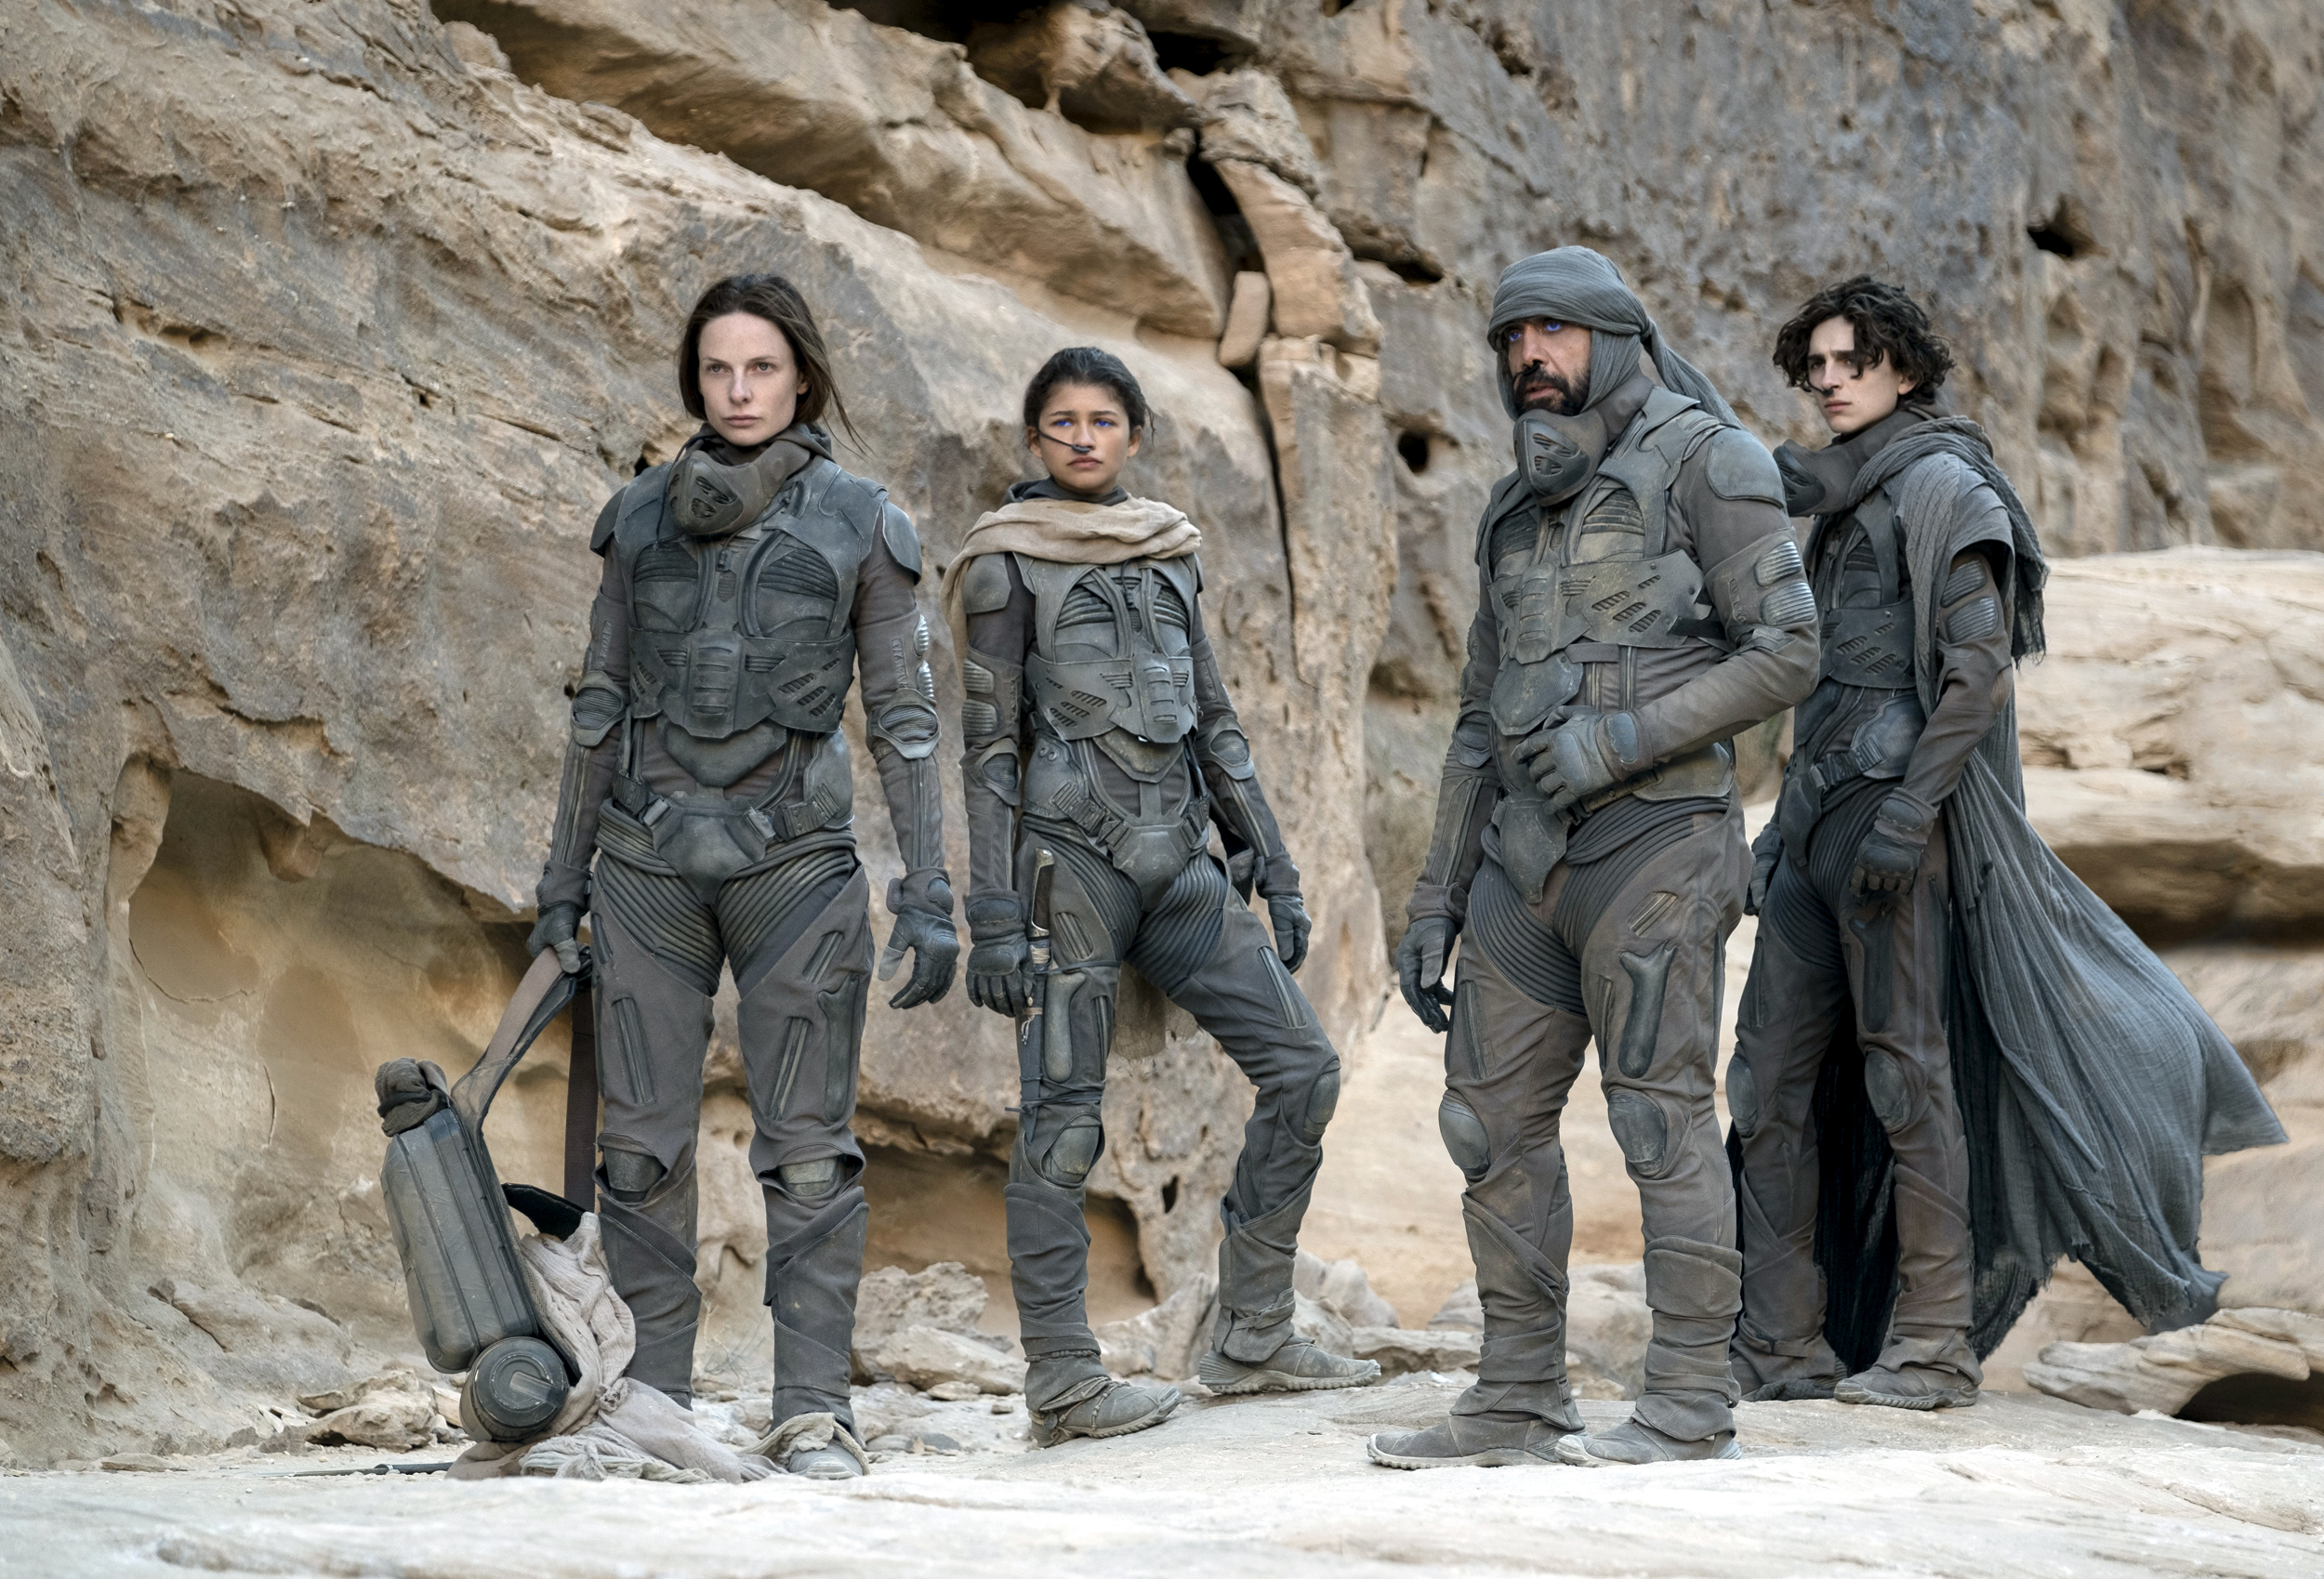 Leading box office, movie Dune has already paid its millionaire budget